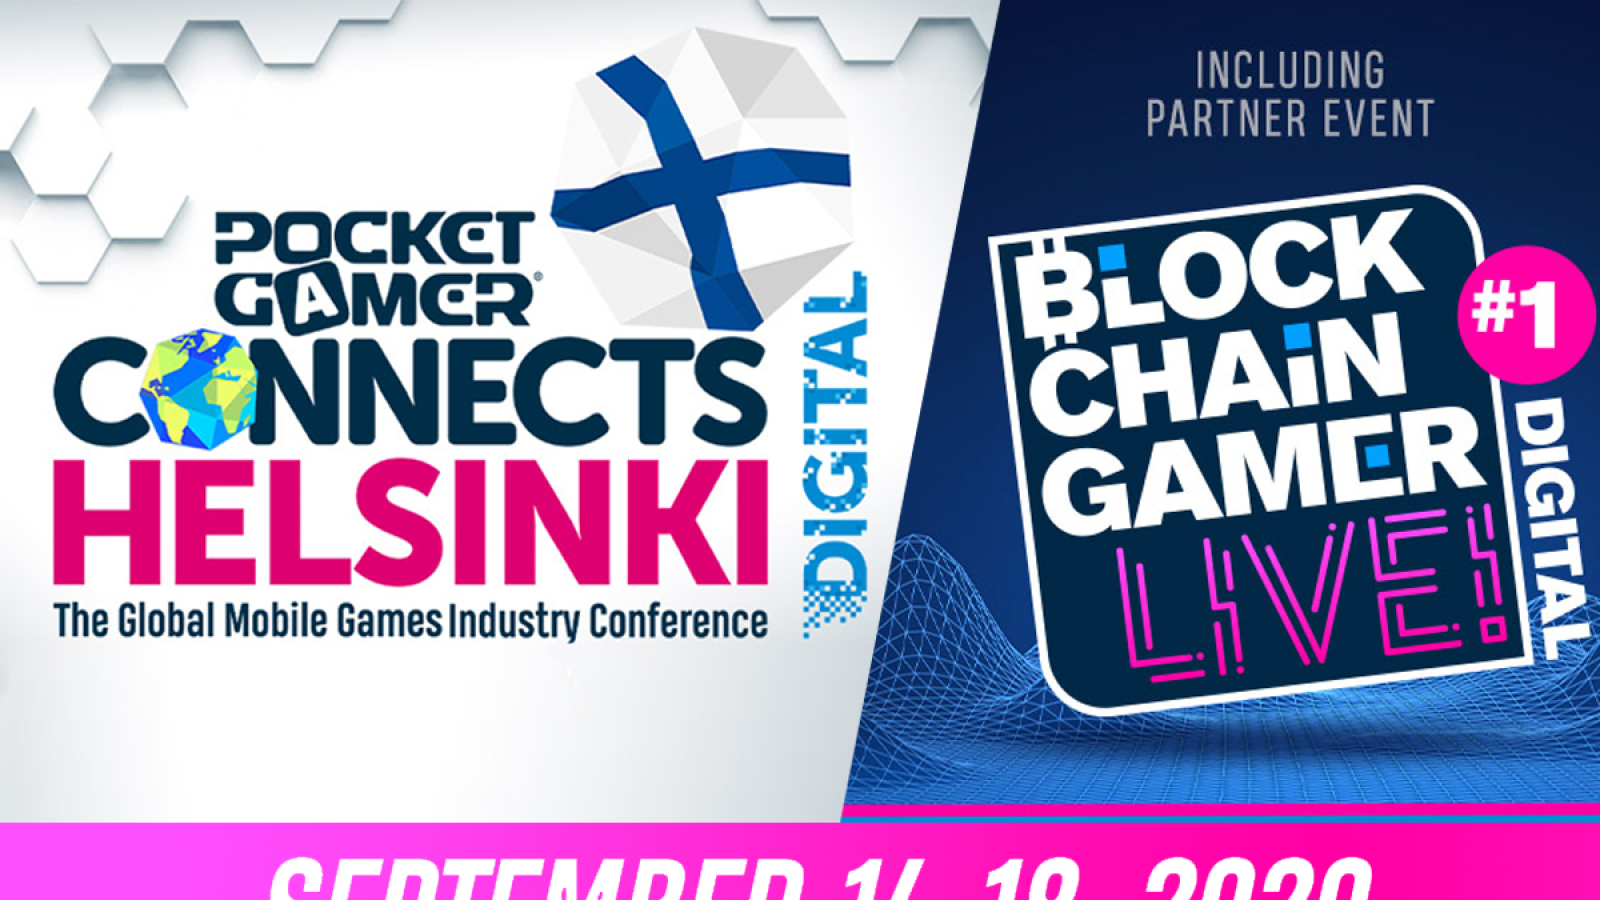 Pocket Gamer Connects Helsinki Digital 2020 and Blockchain Gamer LIVE! Digital #1 launches on September 14-18